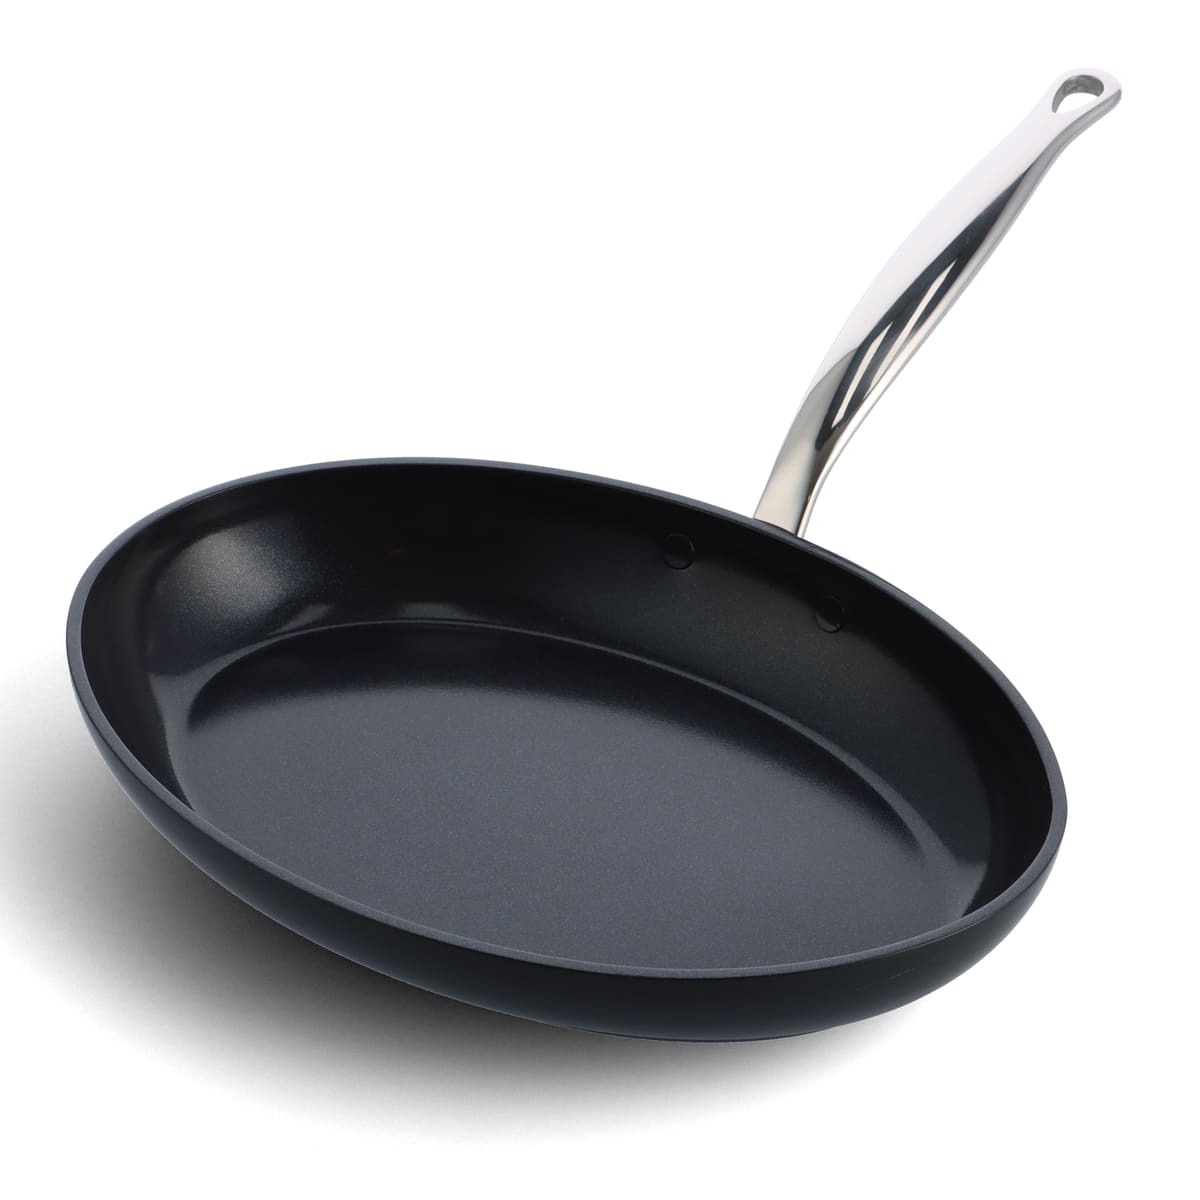 CC005339-001 - Barcelona Pro oval fish pan, black - 33 x 23cm - Product Image 1